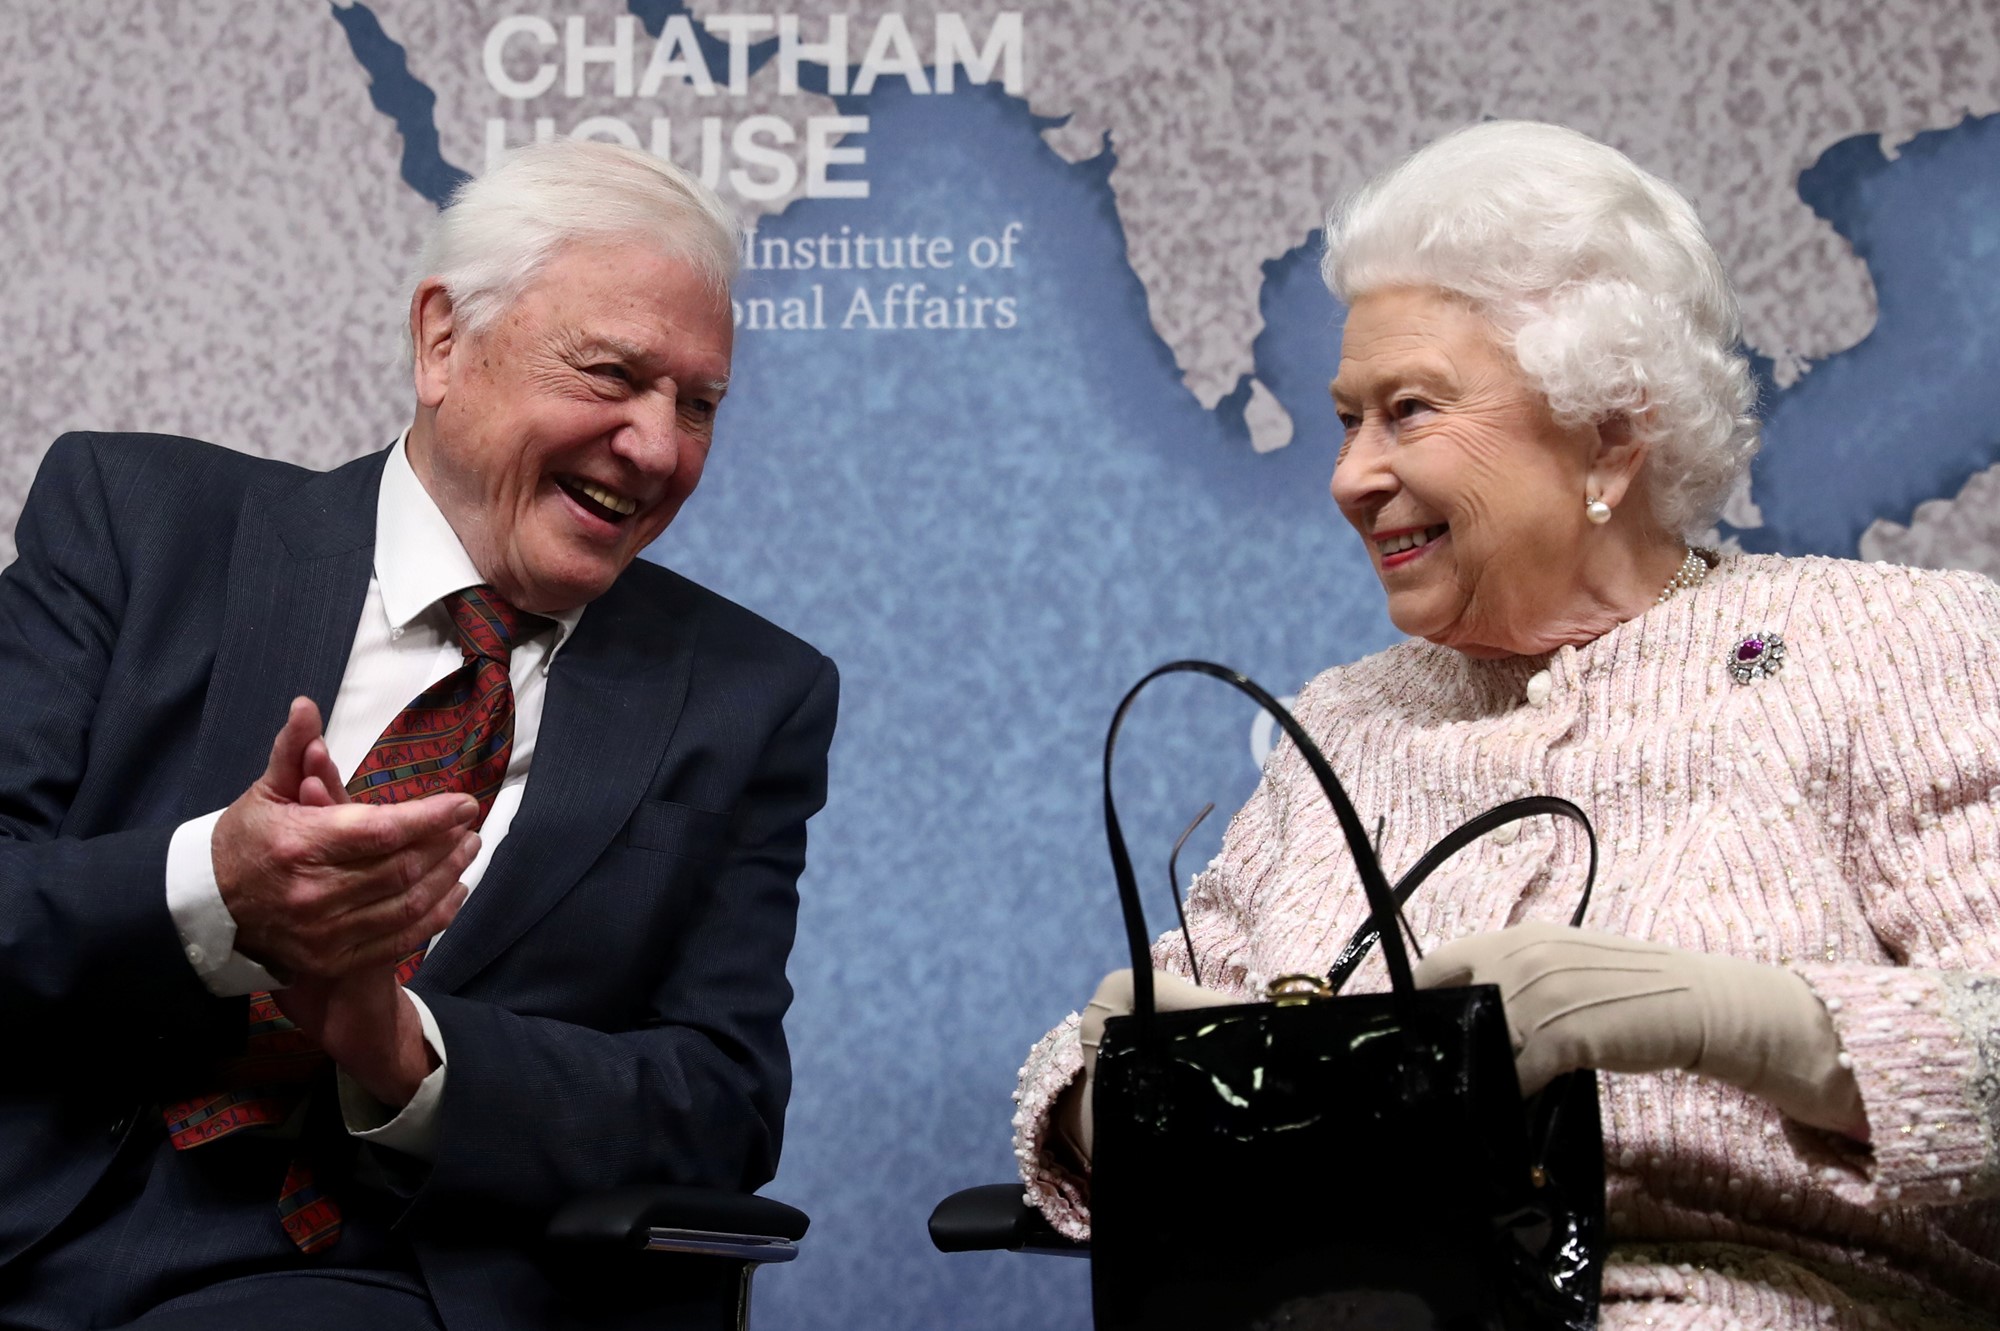 Sir David Attenborough turns towards Queen Elizabeth II at Chatham House.